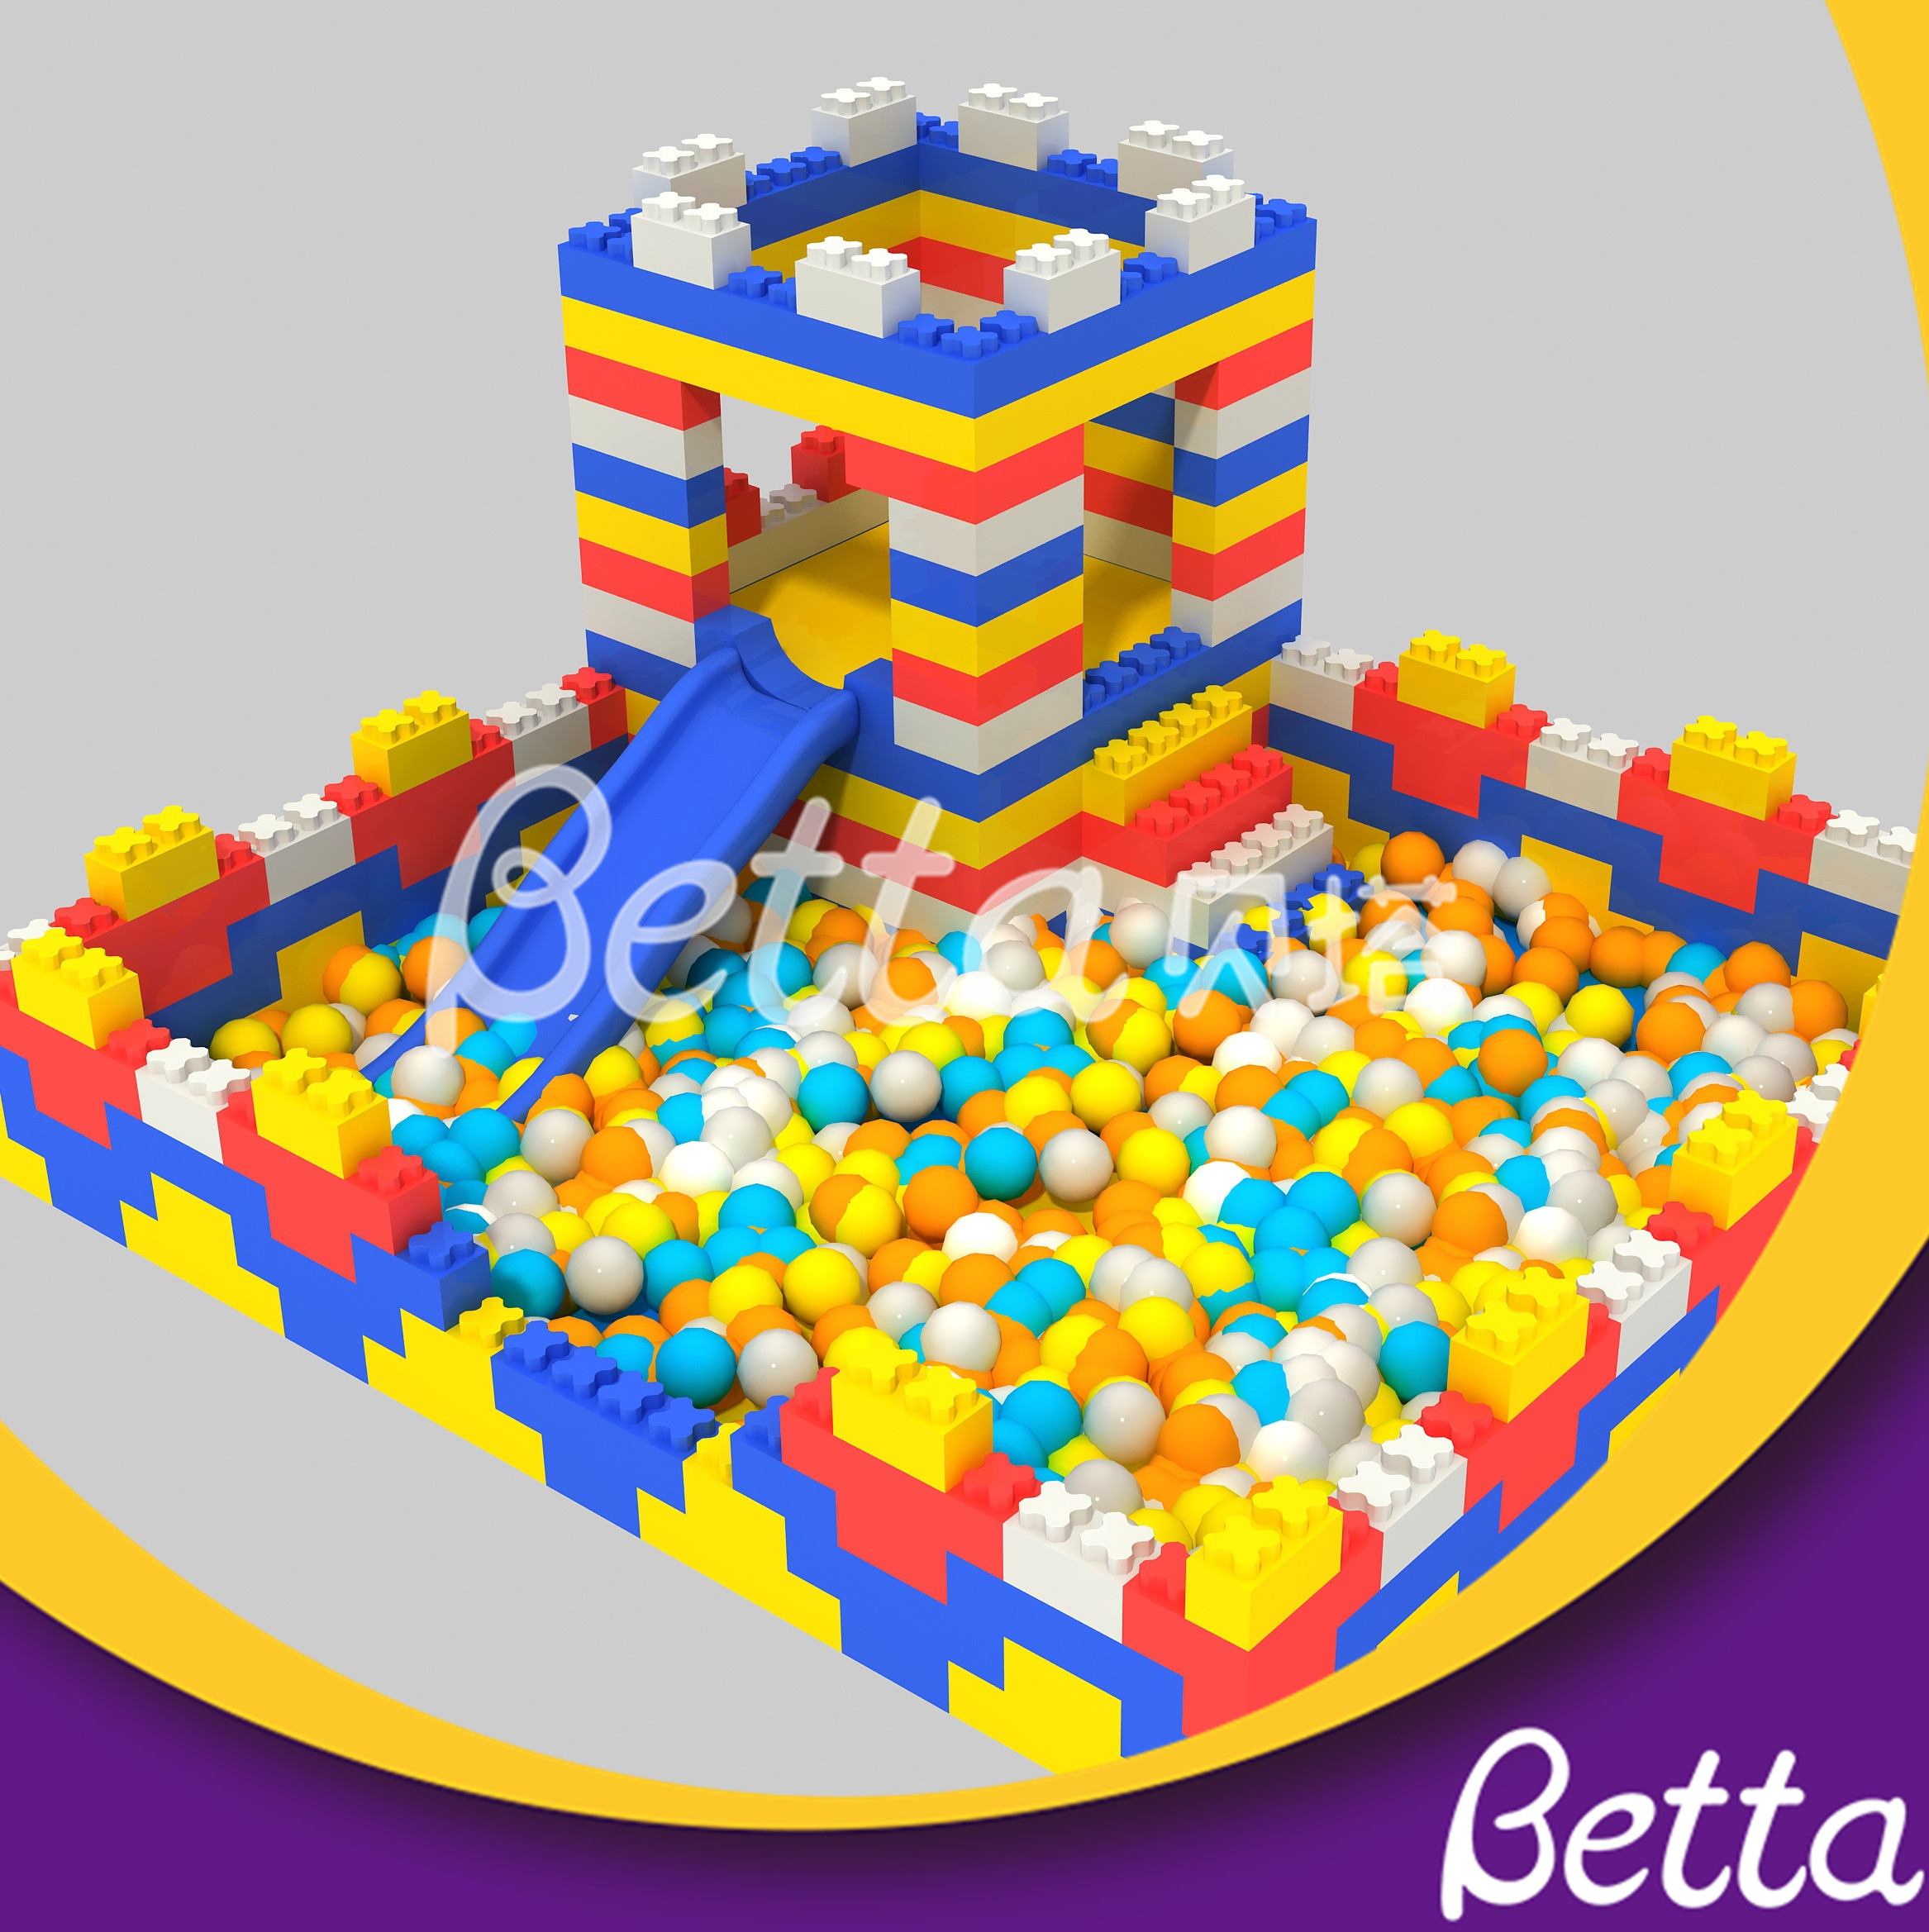 Bettaplay Epp Foam Block Building DIY Educational Toy for Kids Play